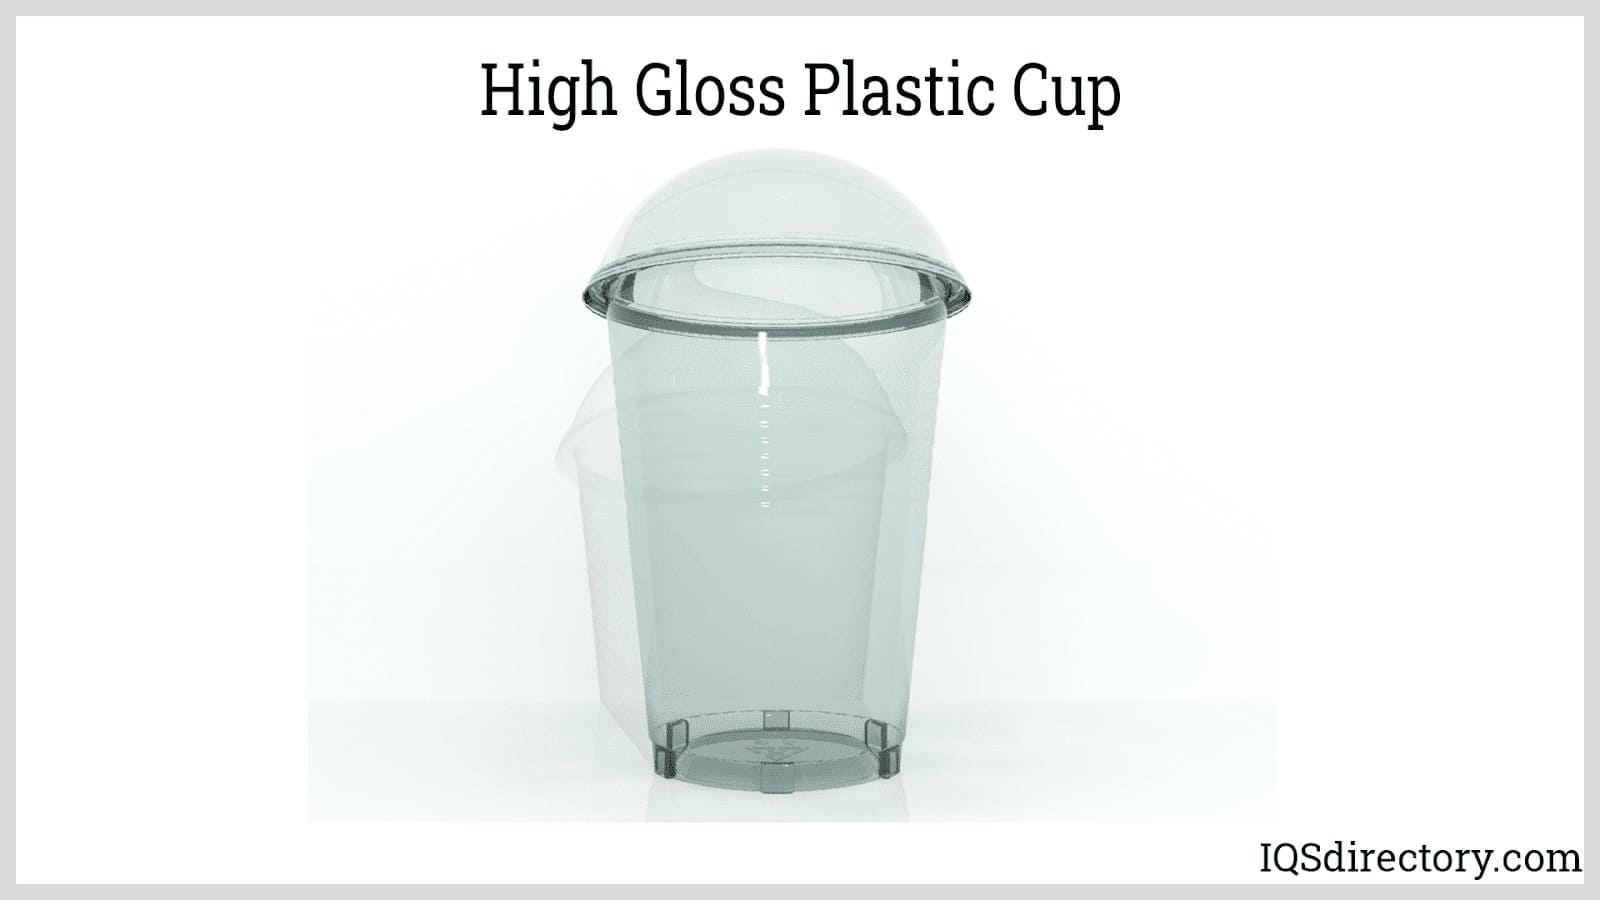 High Gloss Plastic Cup